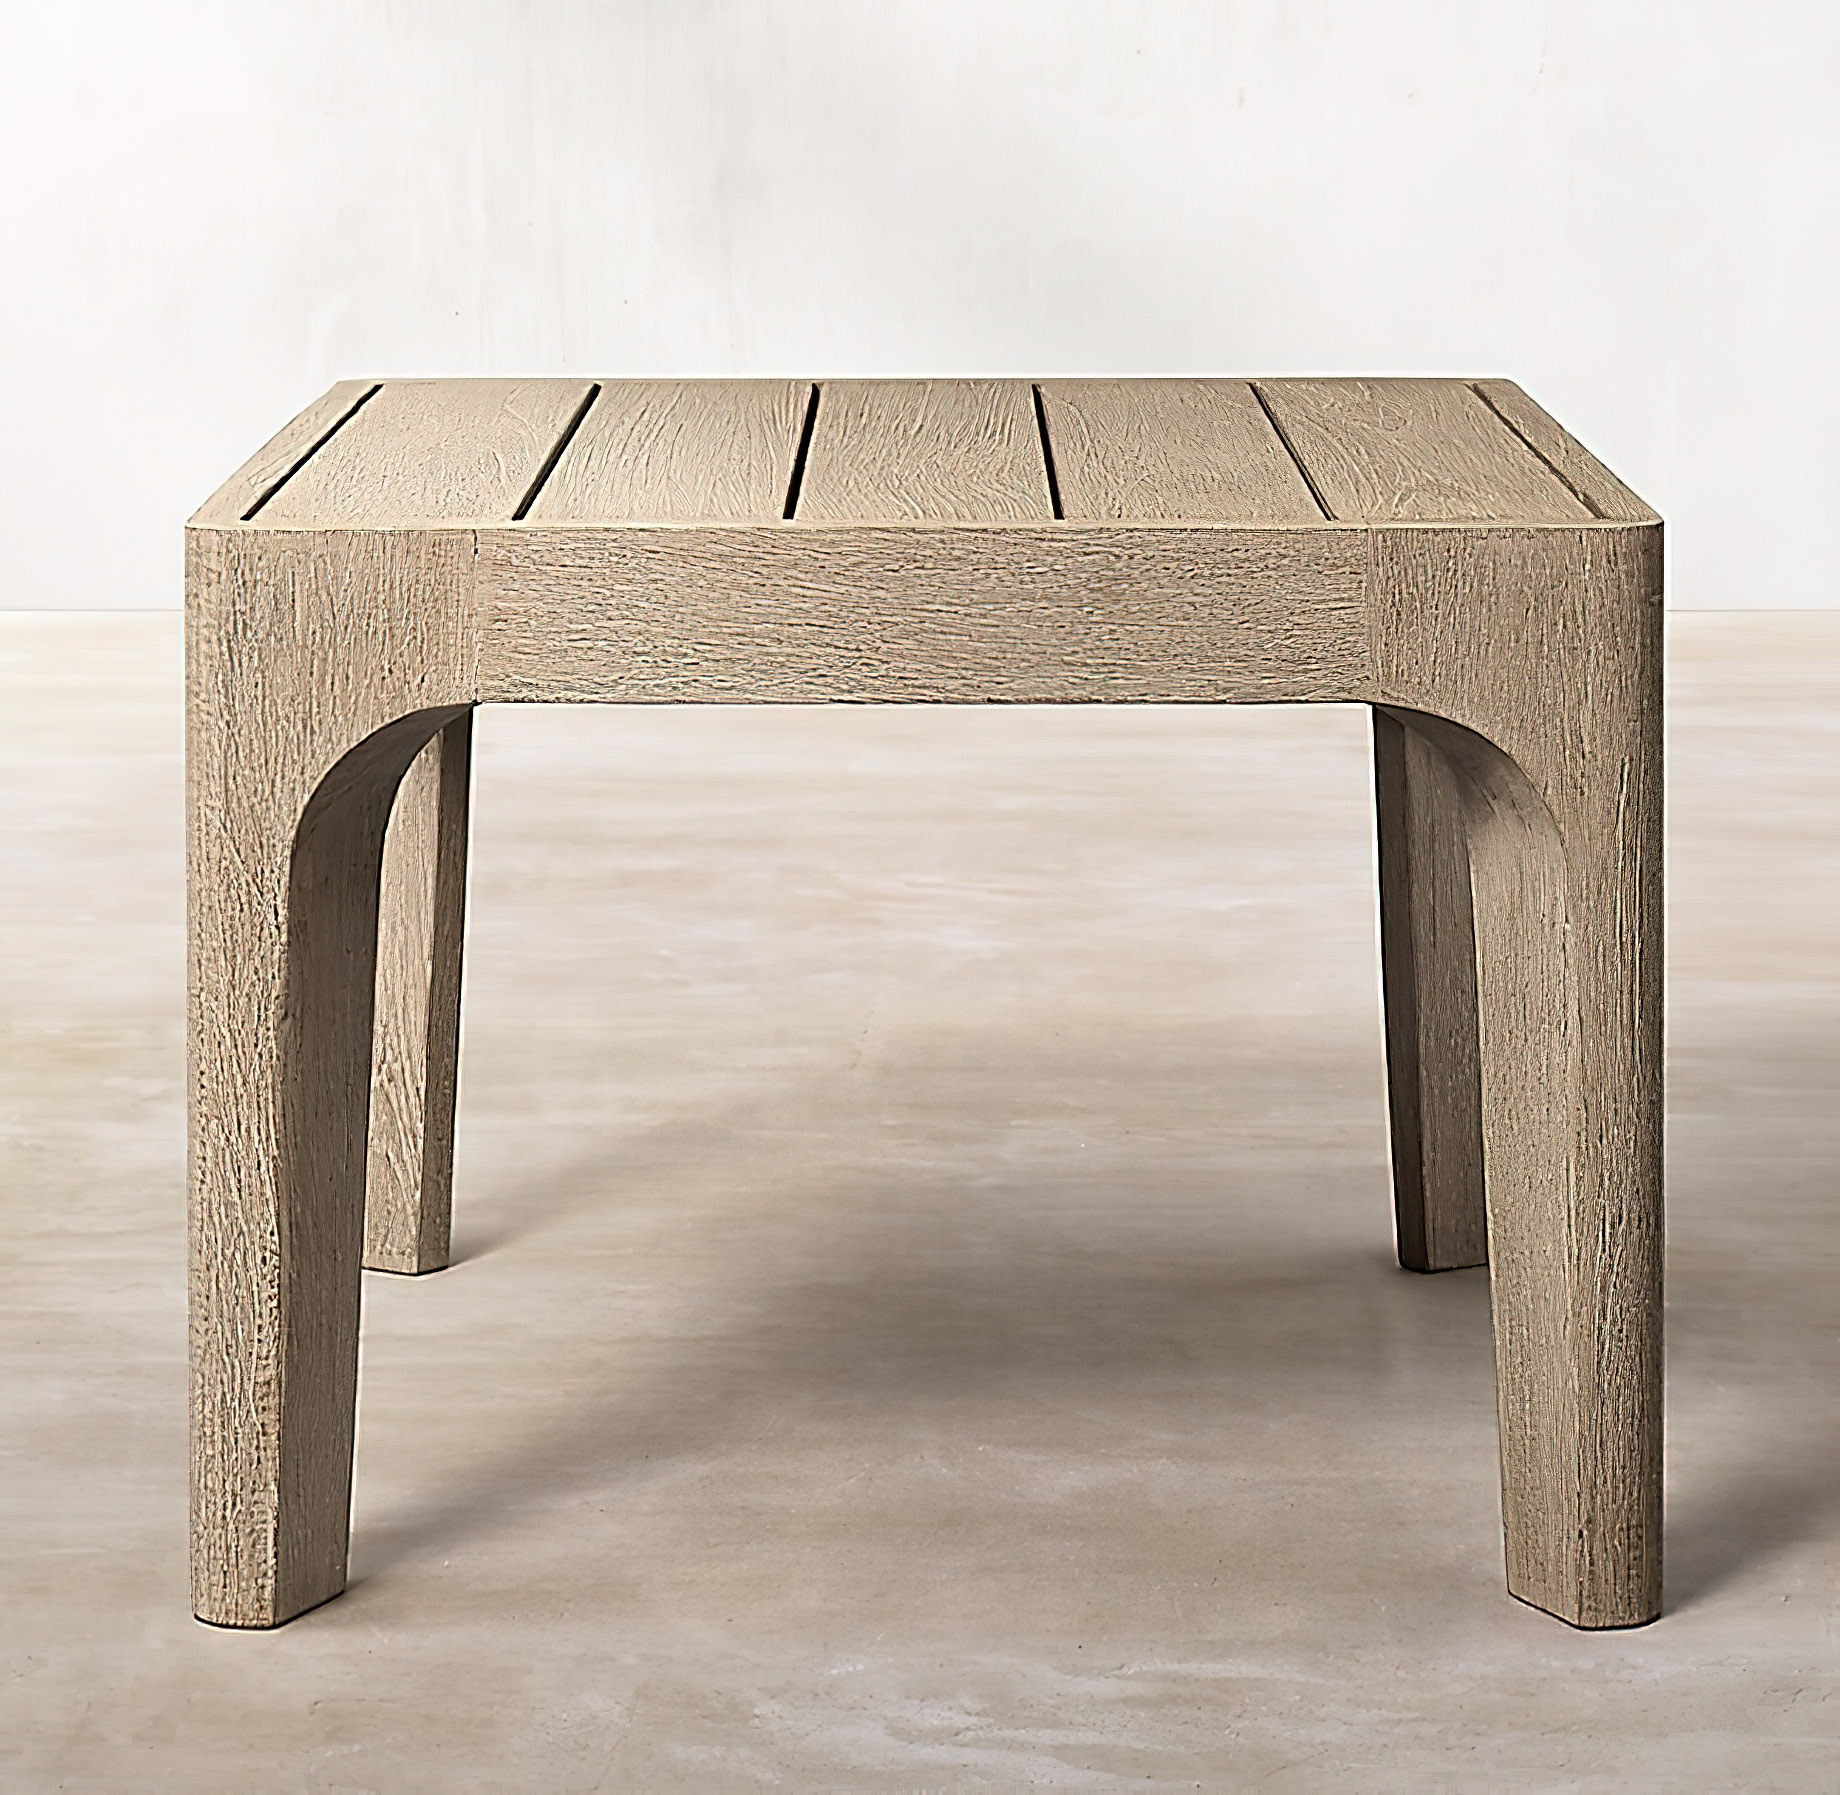 Malta Teak Collection Outdoor Furniture Design for RH – Ramon Esteve – Malta Teak Side Table